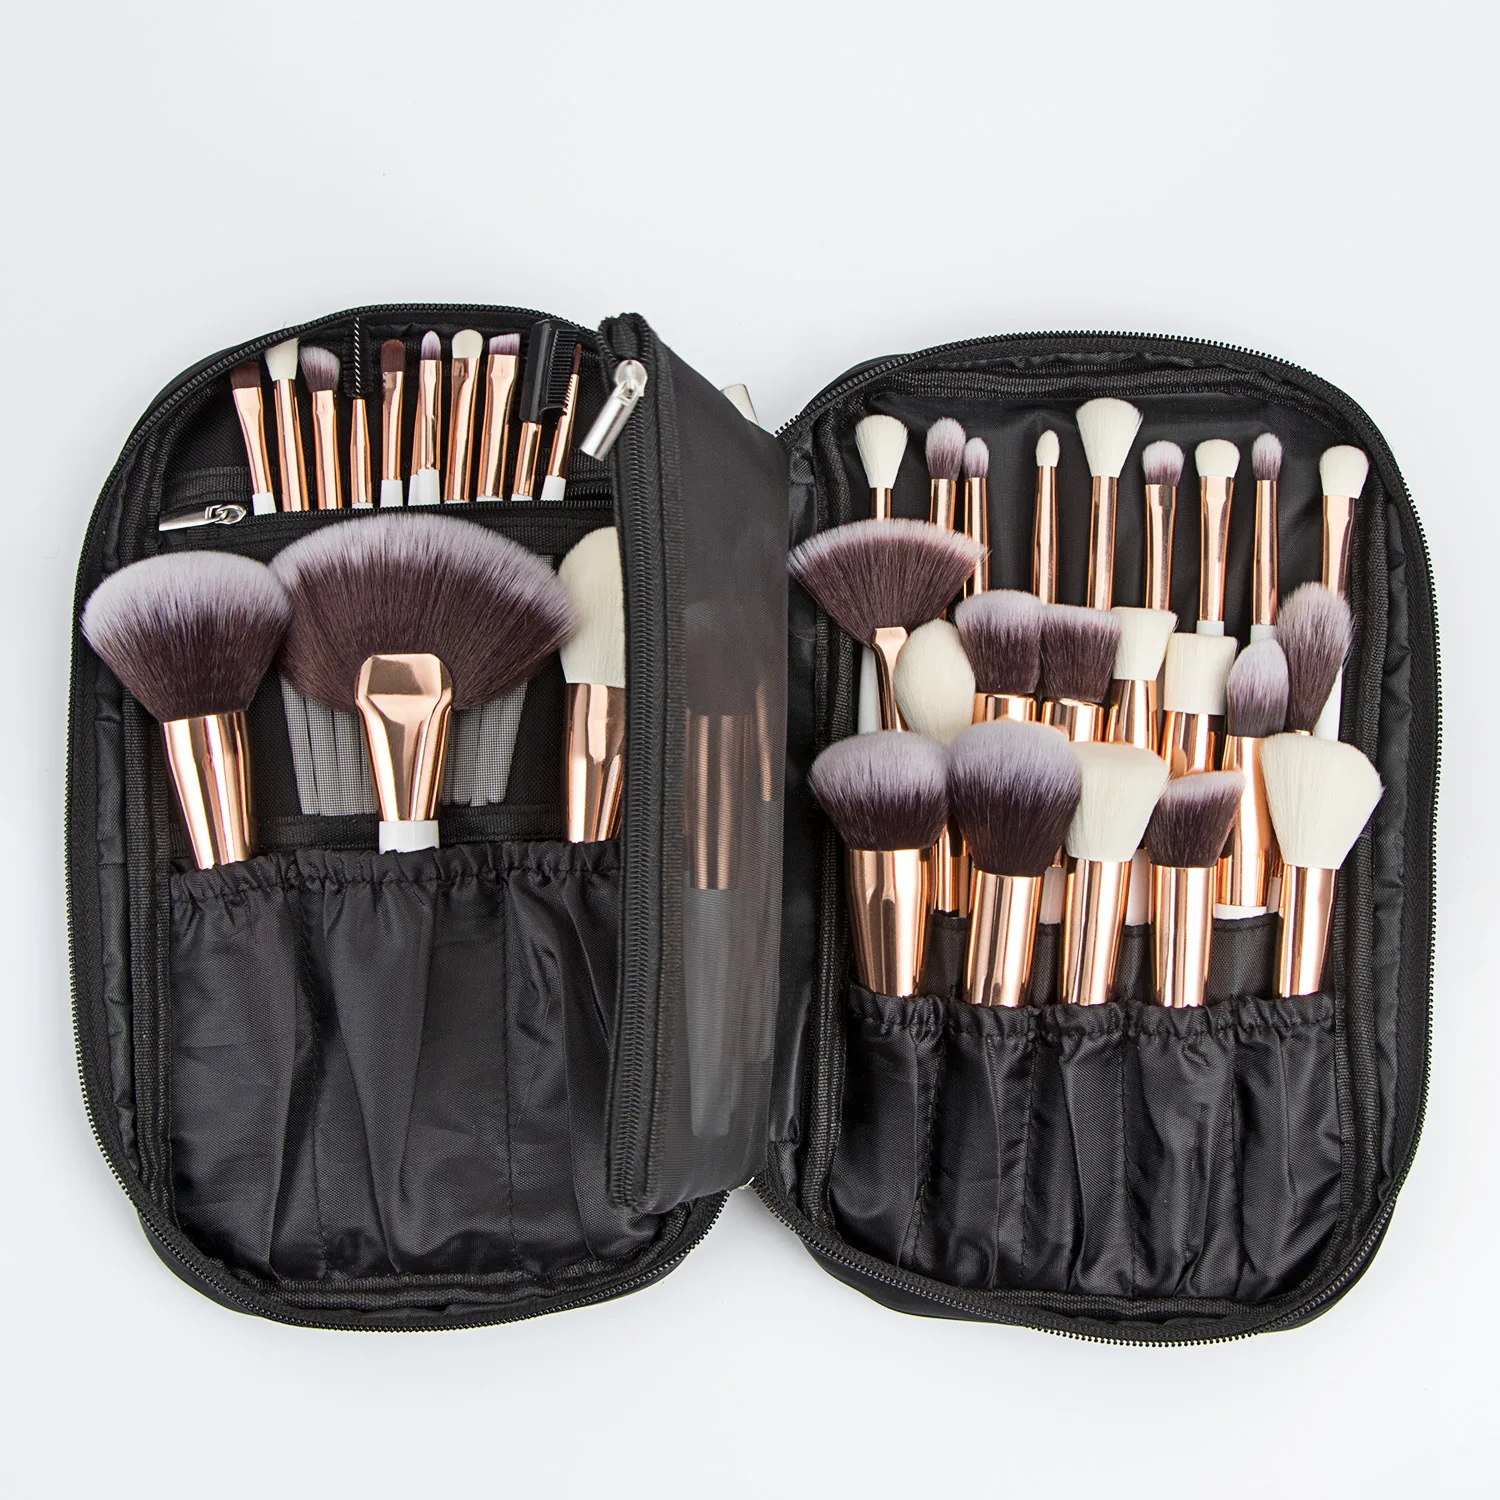 Wholesale Professional 40pcs Makeup Brush Set White 16pcs Makeup Tool Loose Brush Eye Shadow Makeup travel Kit With Bag From m.alibaba.com